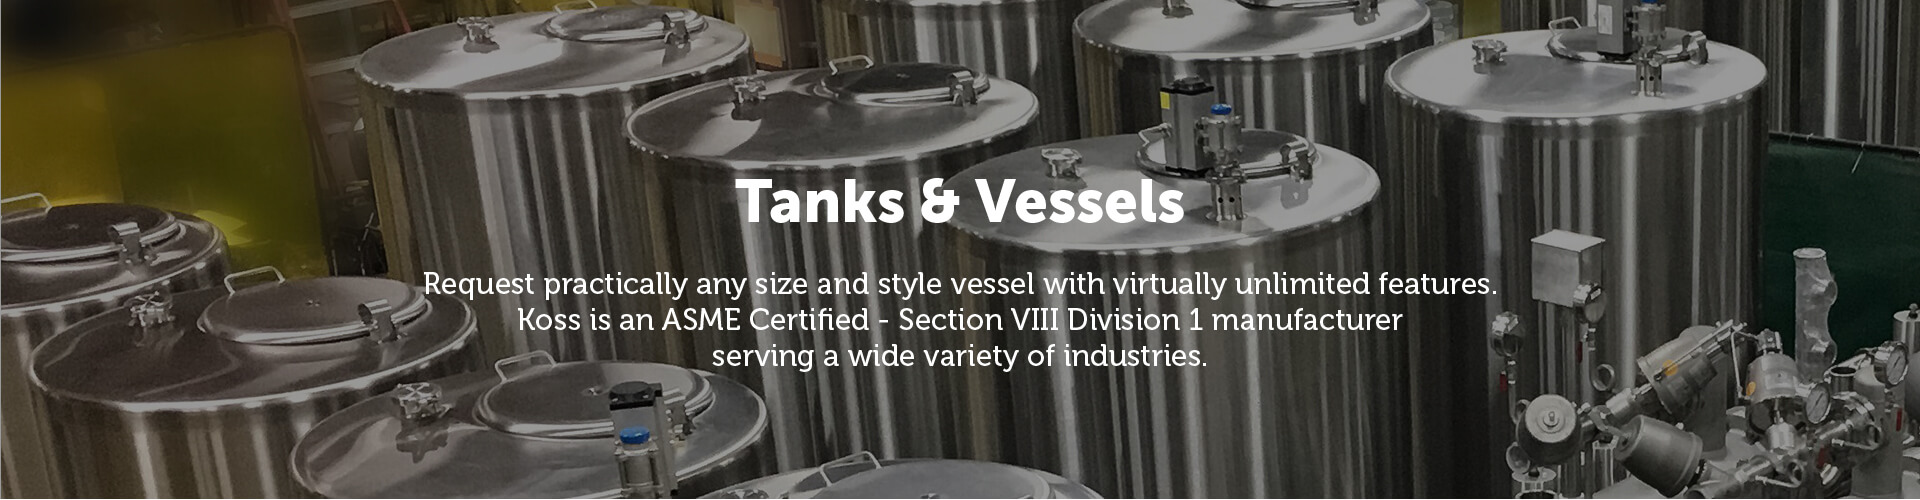 Koss Tanks & Vessels